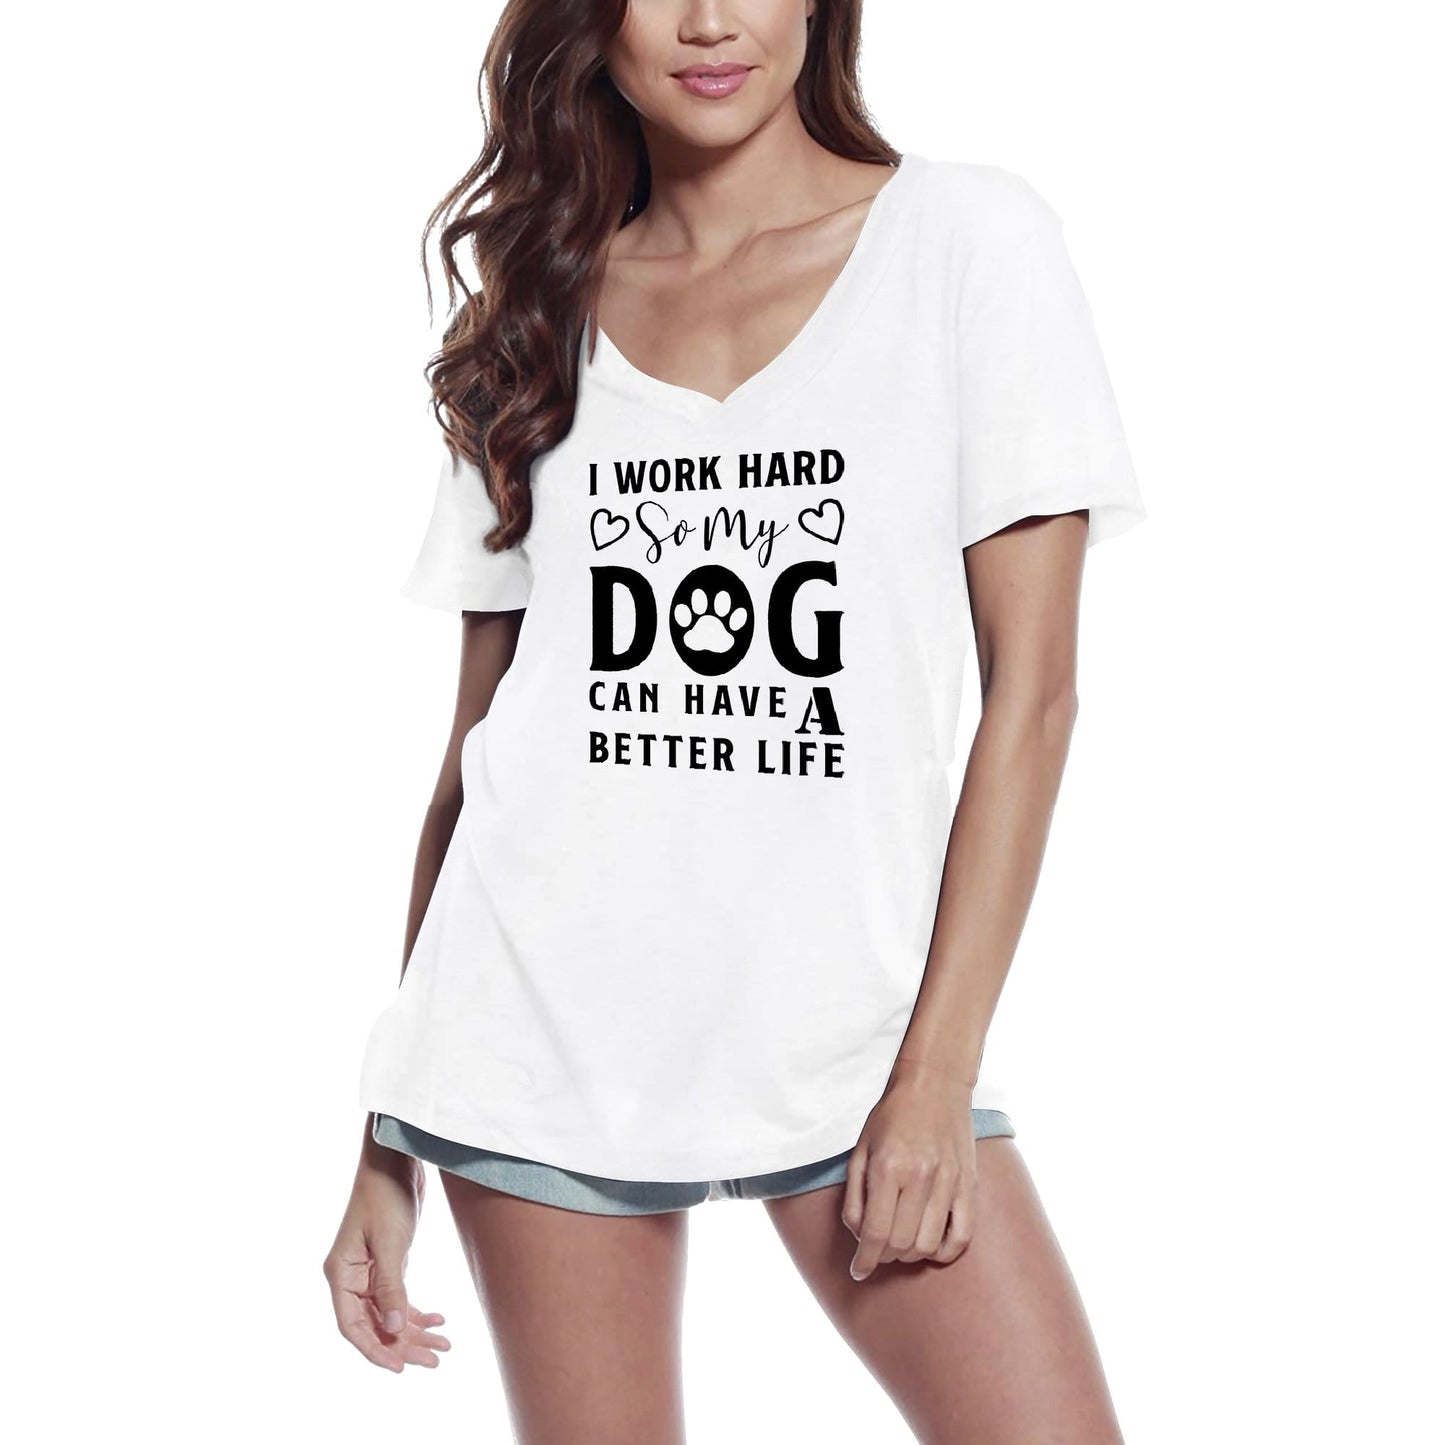 ULTRABASIC Women's T-Shirt I Work Hard So My Dog Can Have a Better Life - Short Sleeve Tee Shirt Tops